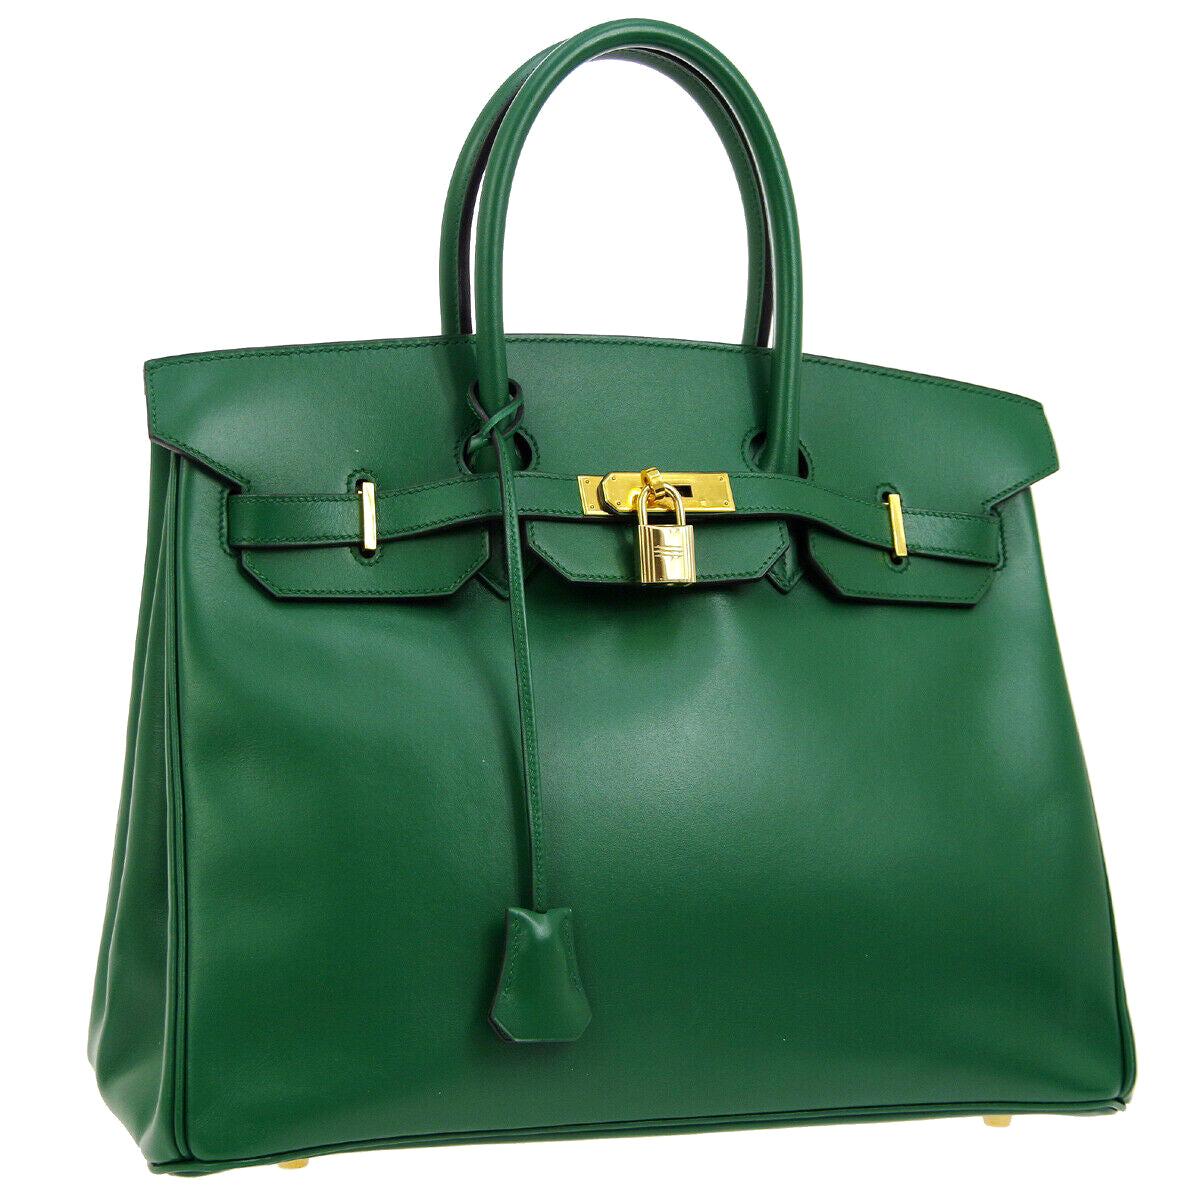 Hermes Birkin 35 Green Leather Gold Top Carryall Handle Satchel Travel Tote Bag